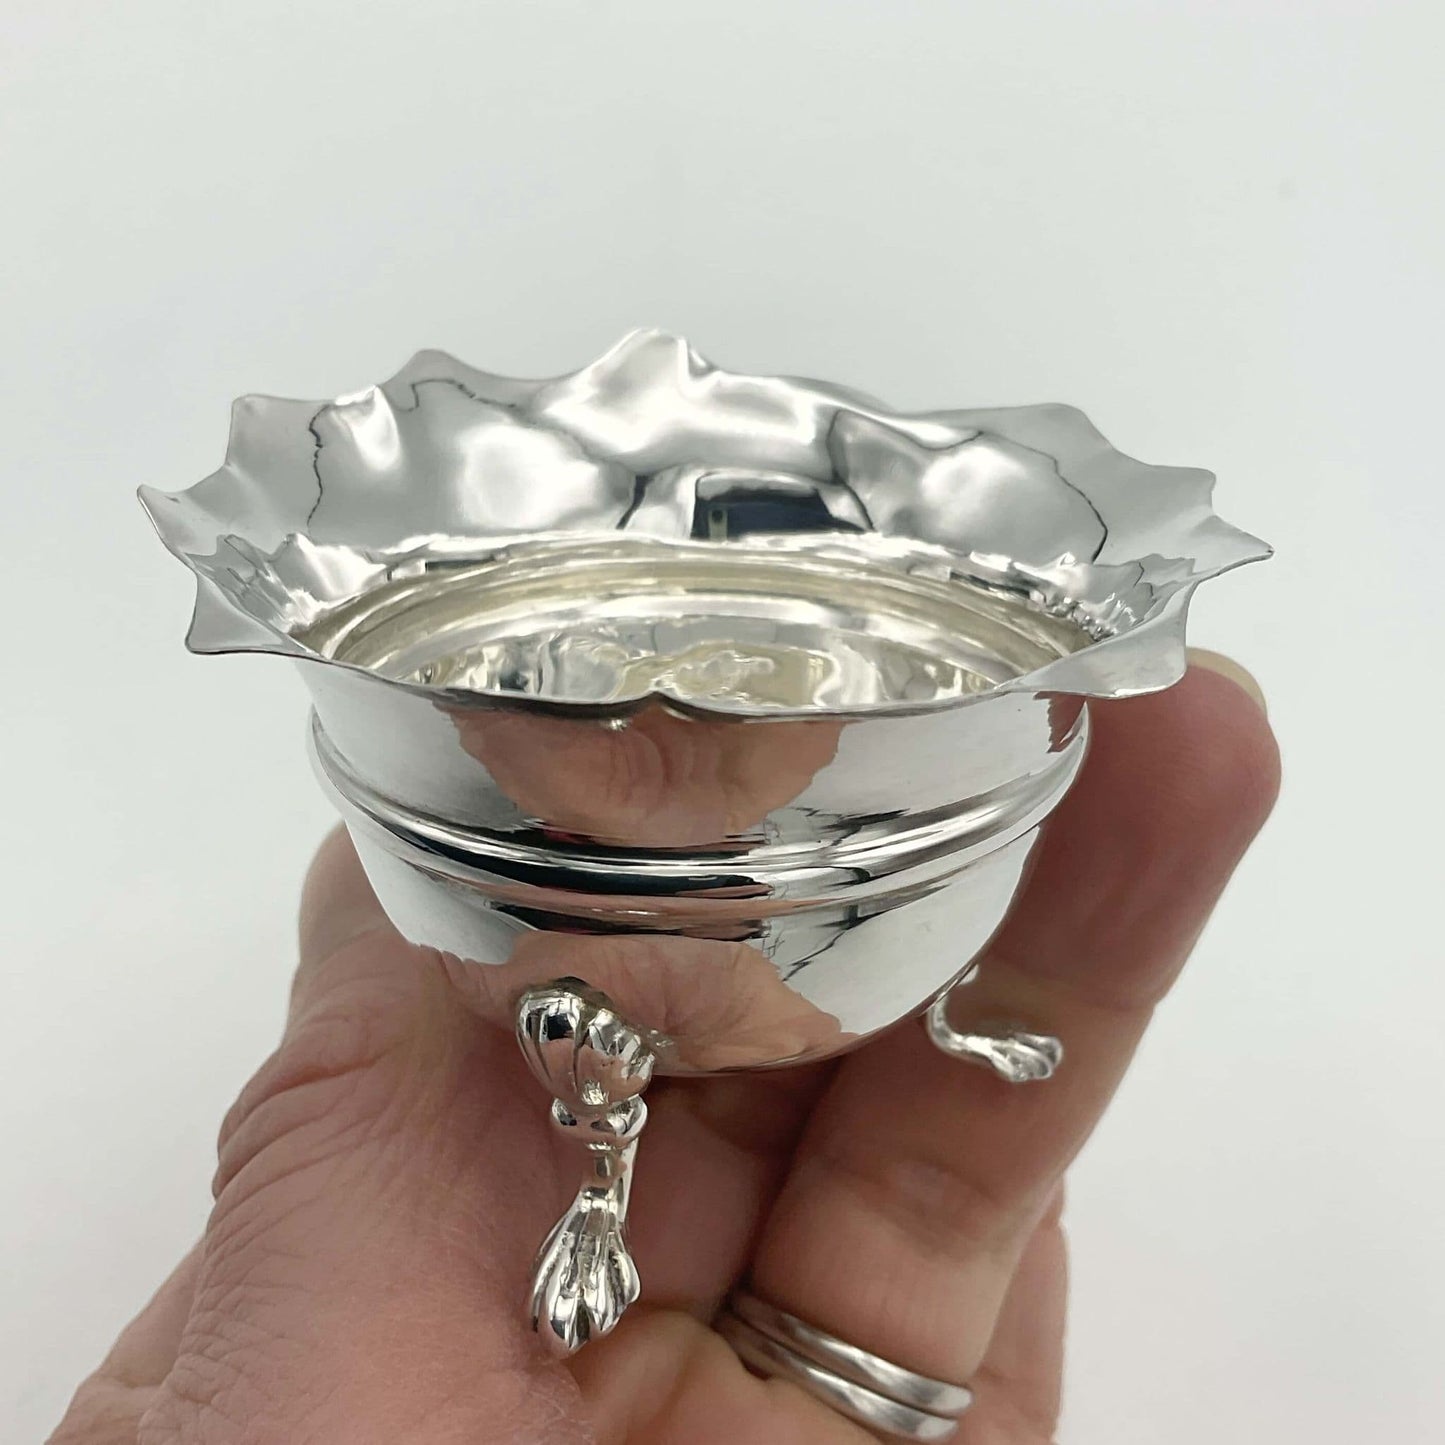 Antique Sterling Silver Salt, 1901 Hallmark, Small Silver Bowl